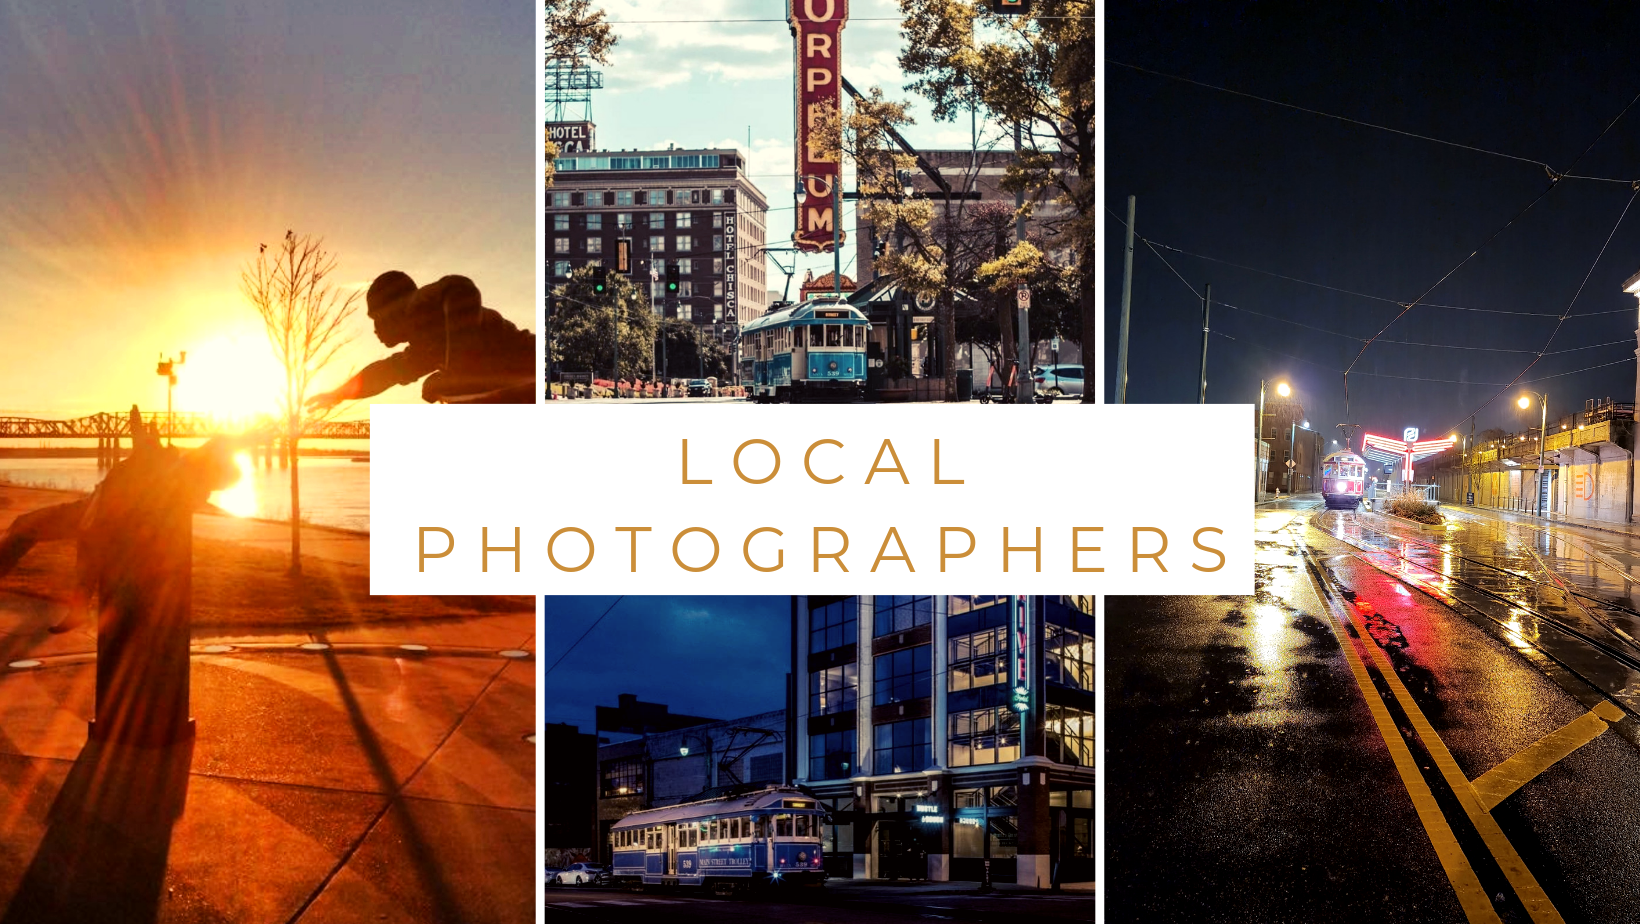 LOCAL PHOTOGRAPHERS